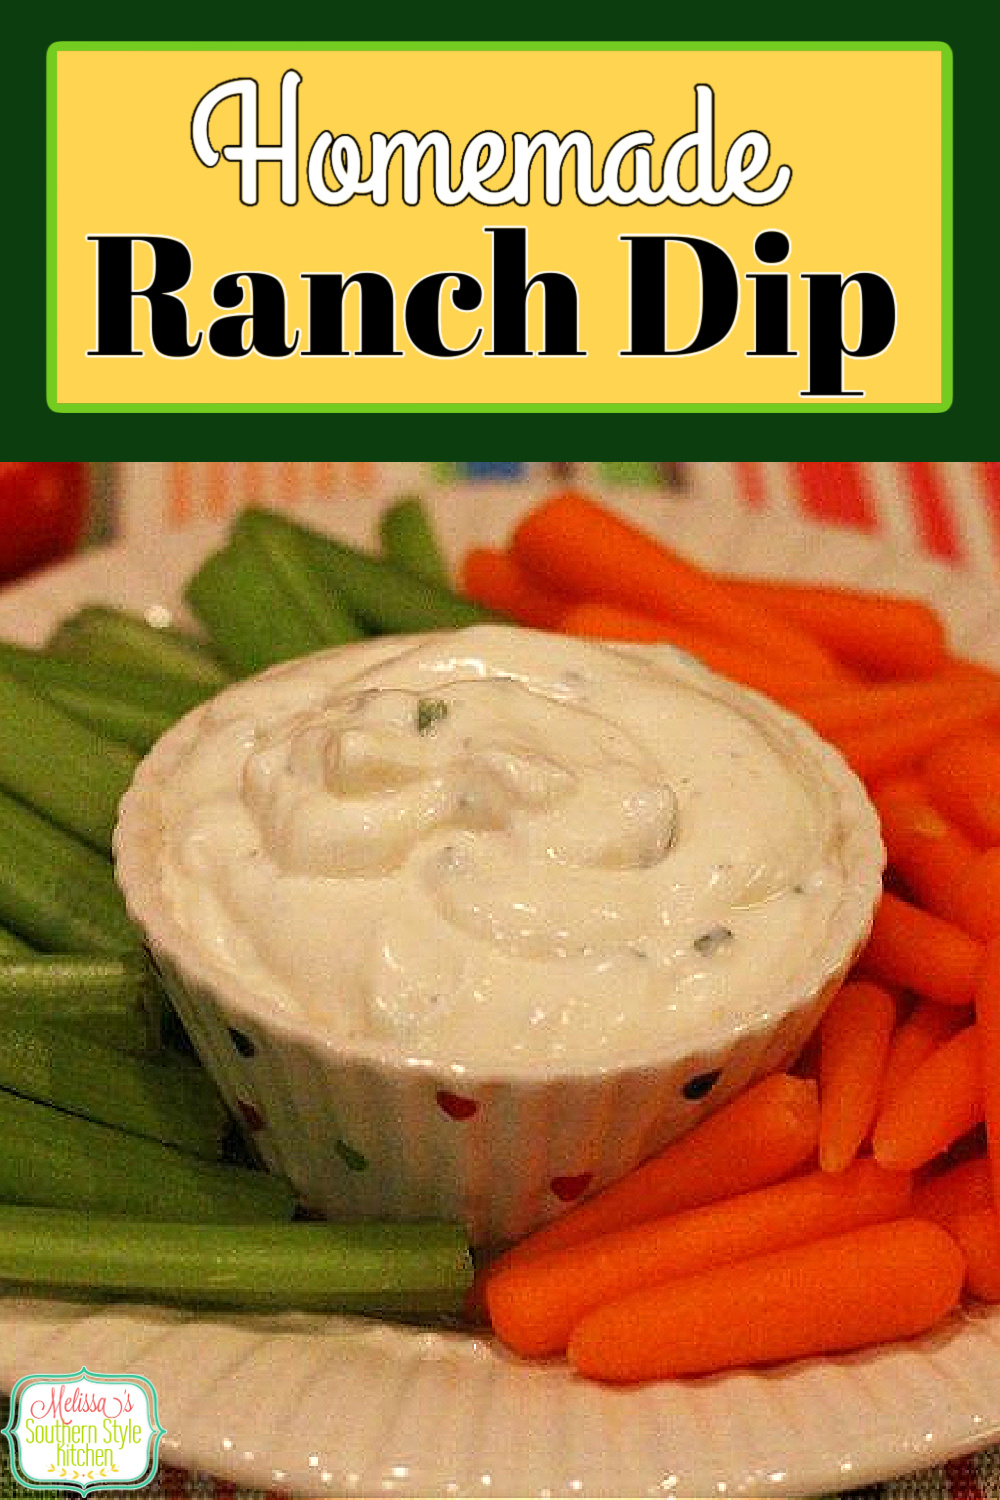 Homemade Ranch Dip ready for dipping with chips and fresh vegetables #ranchdip #homemaderanchdip #diprecipes #homemaderanch #easyrandrecipe #southernrecipes via @melissasssk